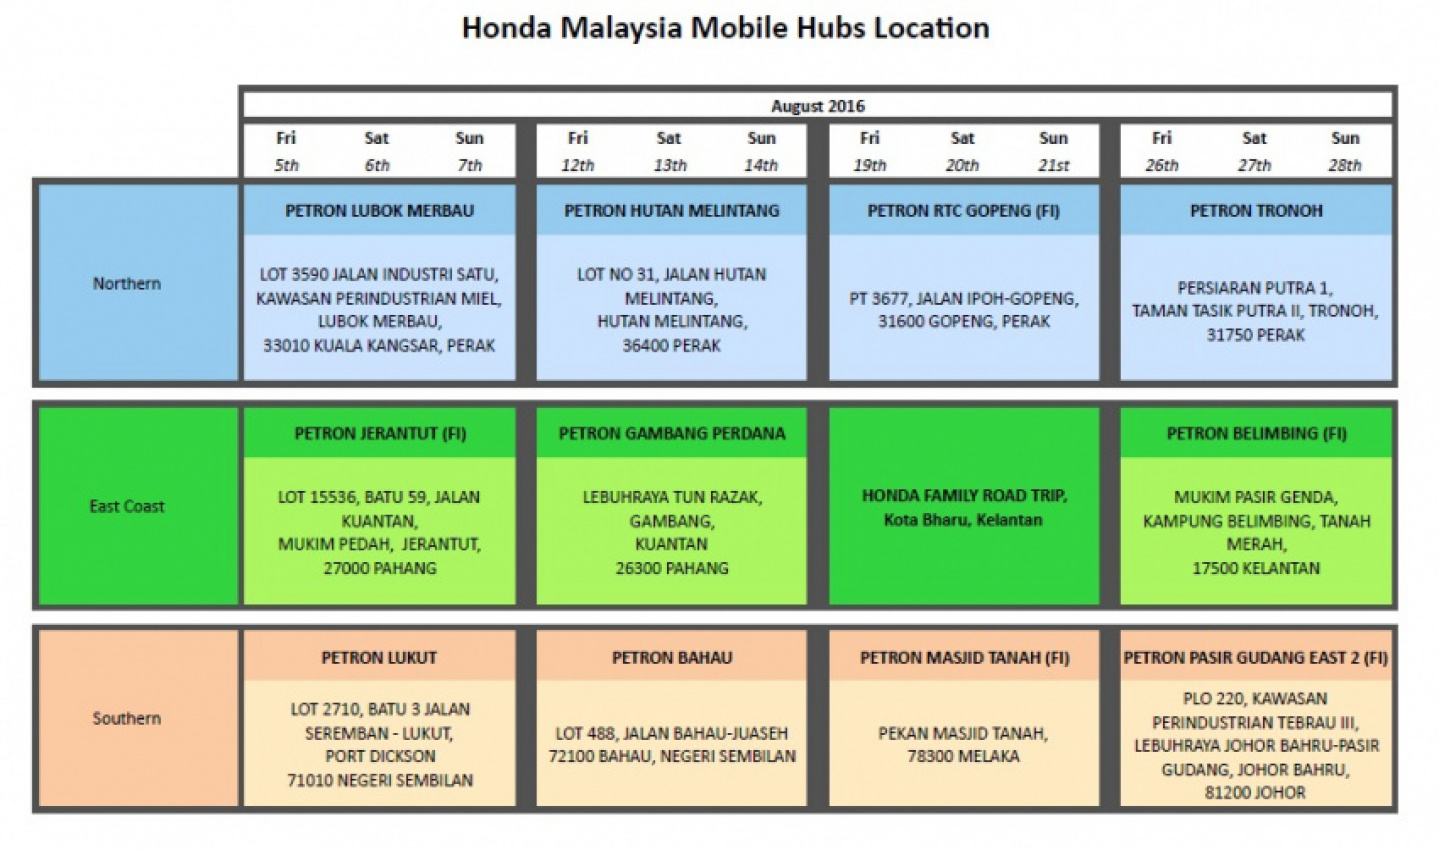 autos, car brands, cars, honda, recall, takata, update on honda malaysia’s takata airbag recall